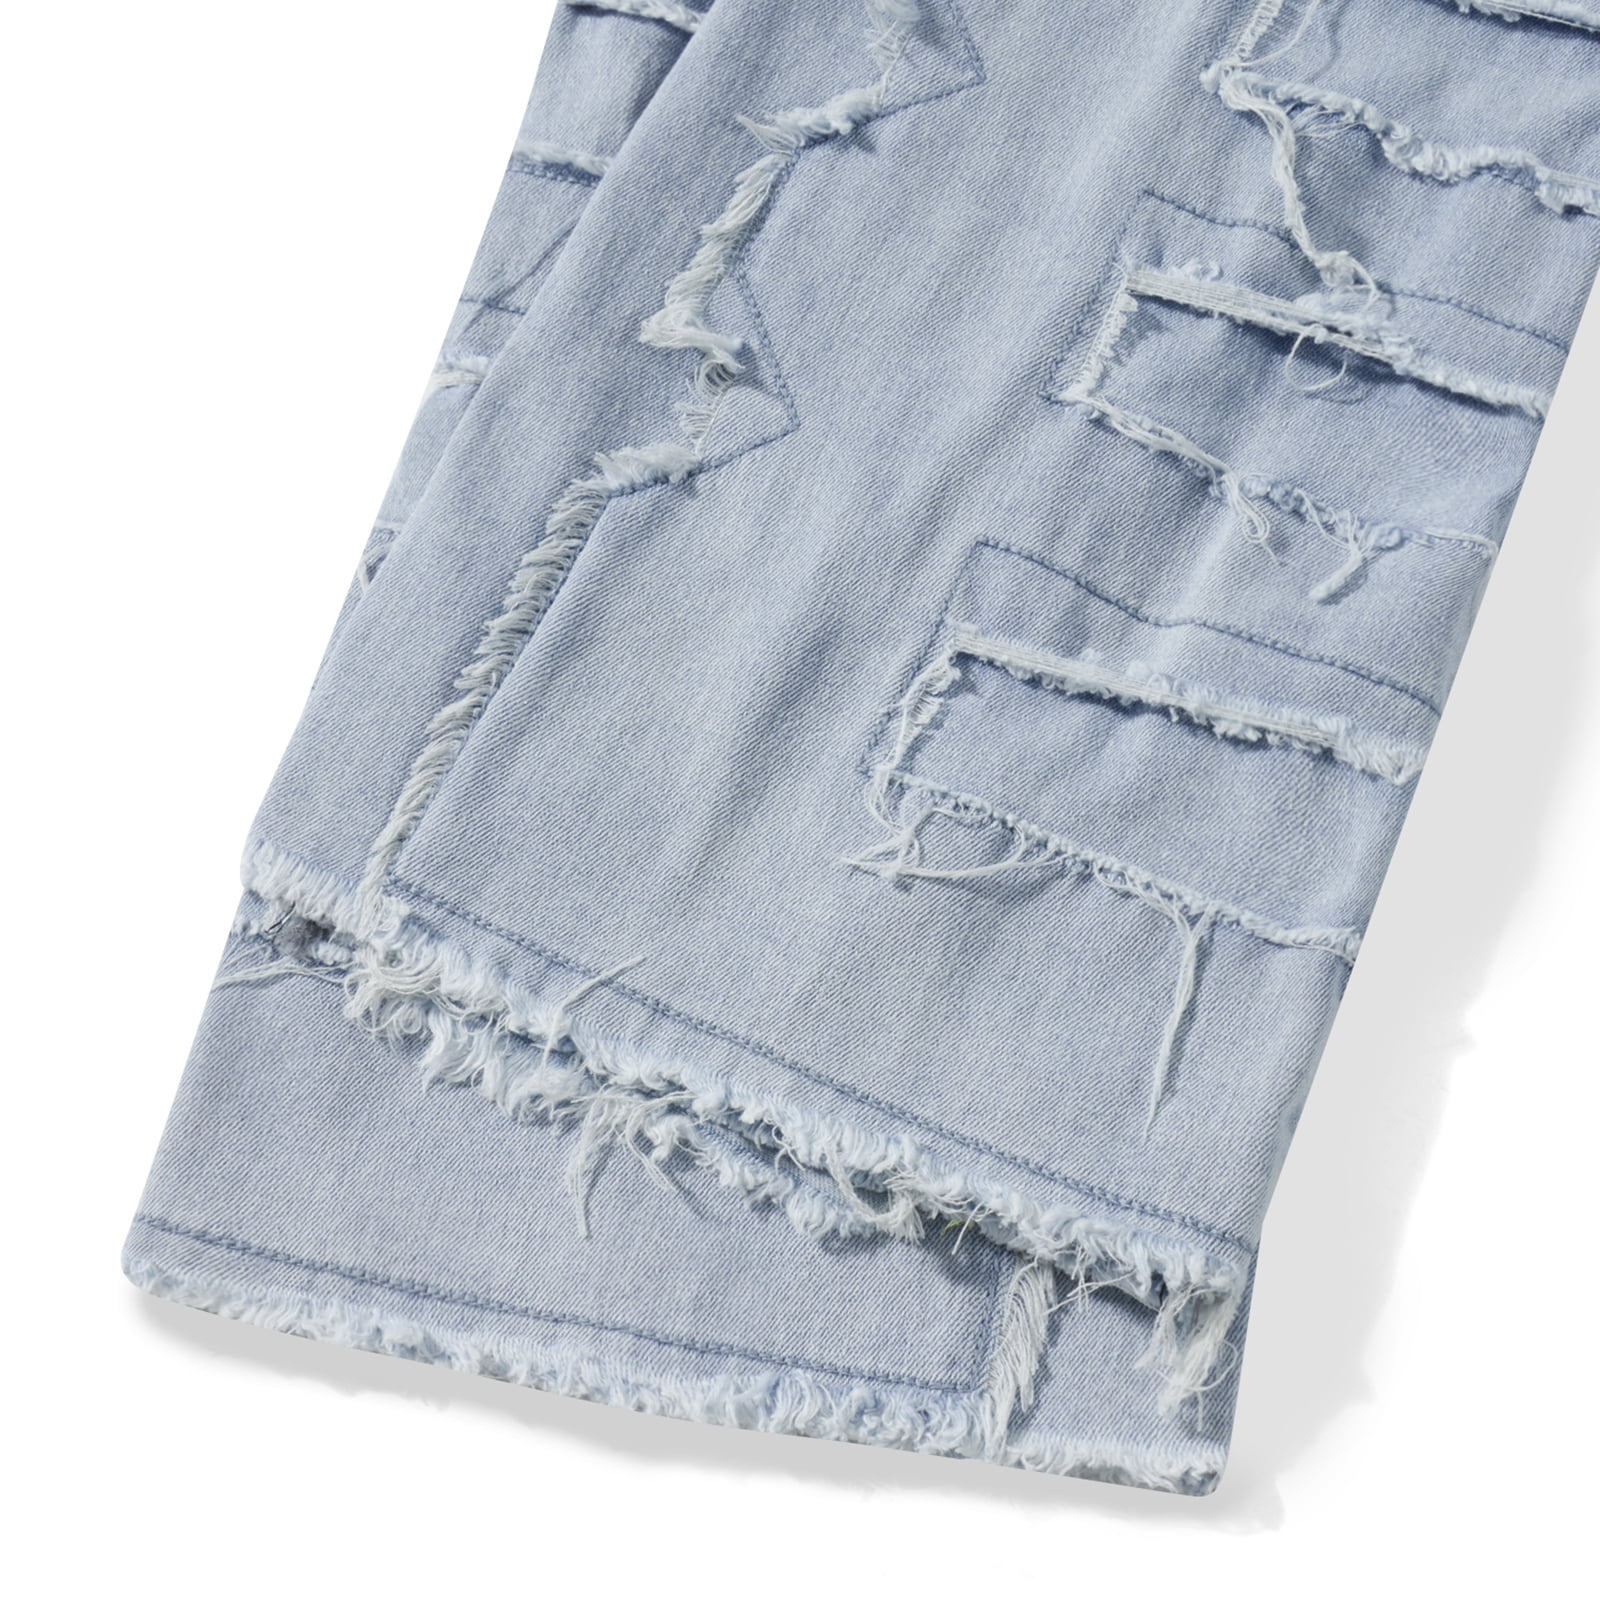 Sunisery Men's Regular Fit Stacked Jeans Patch Distressed Denim Pants  Streetwear,Light Blue 